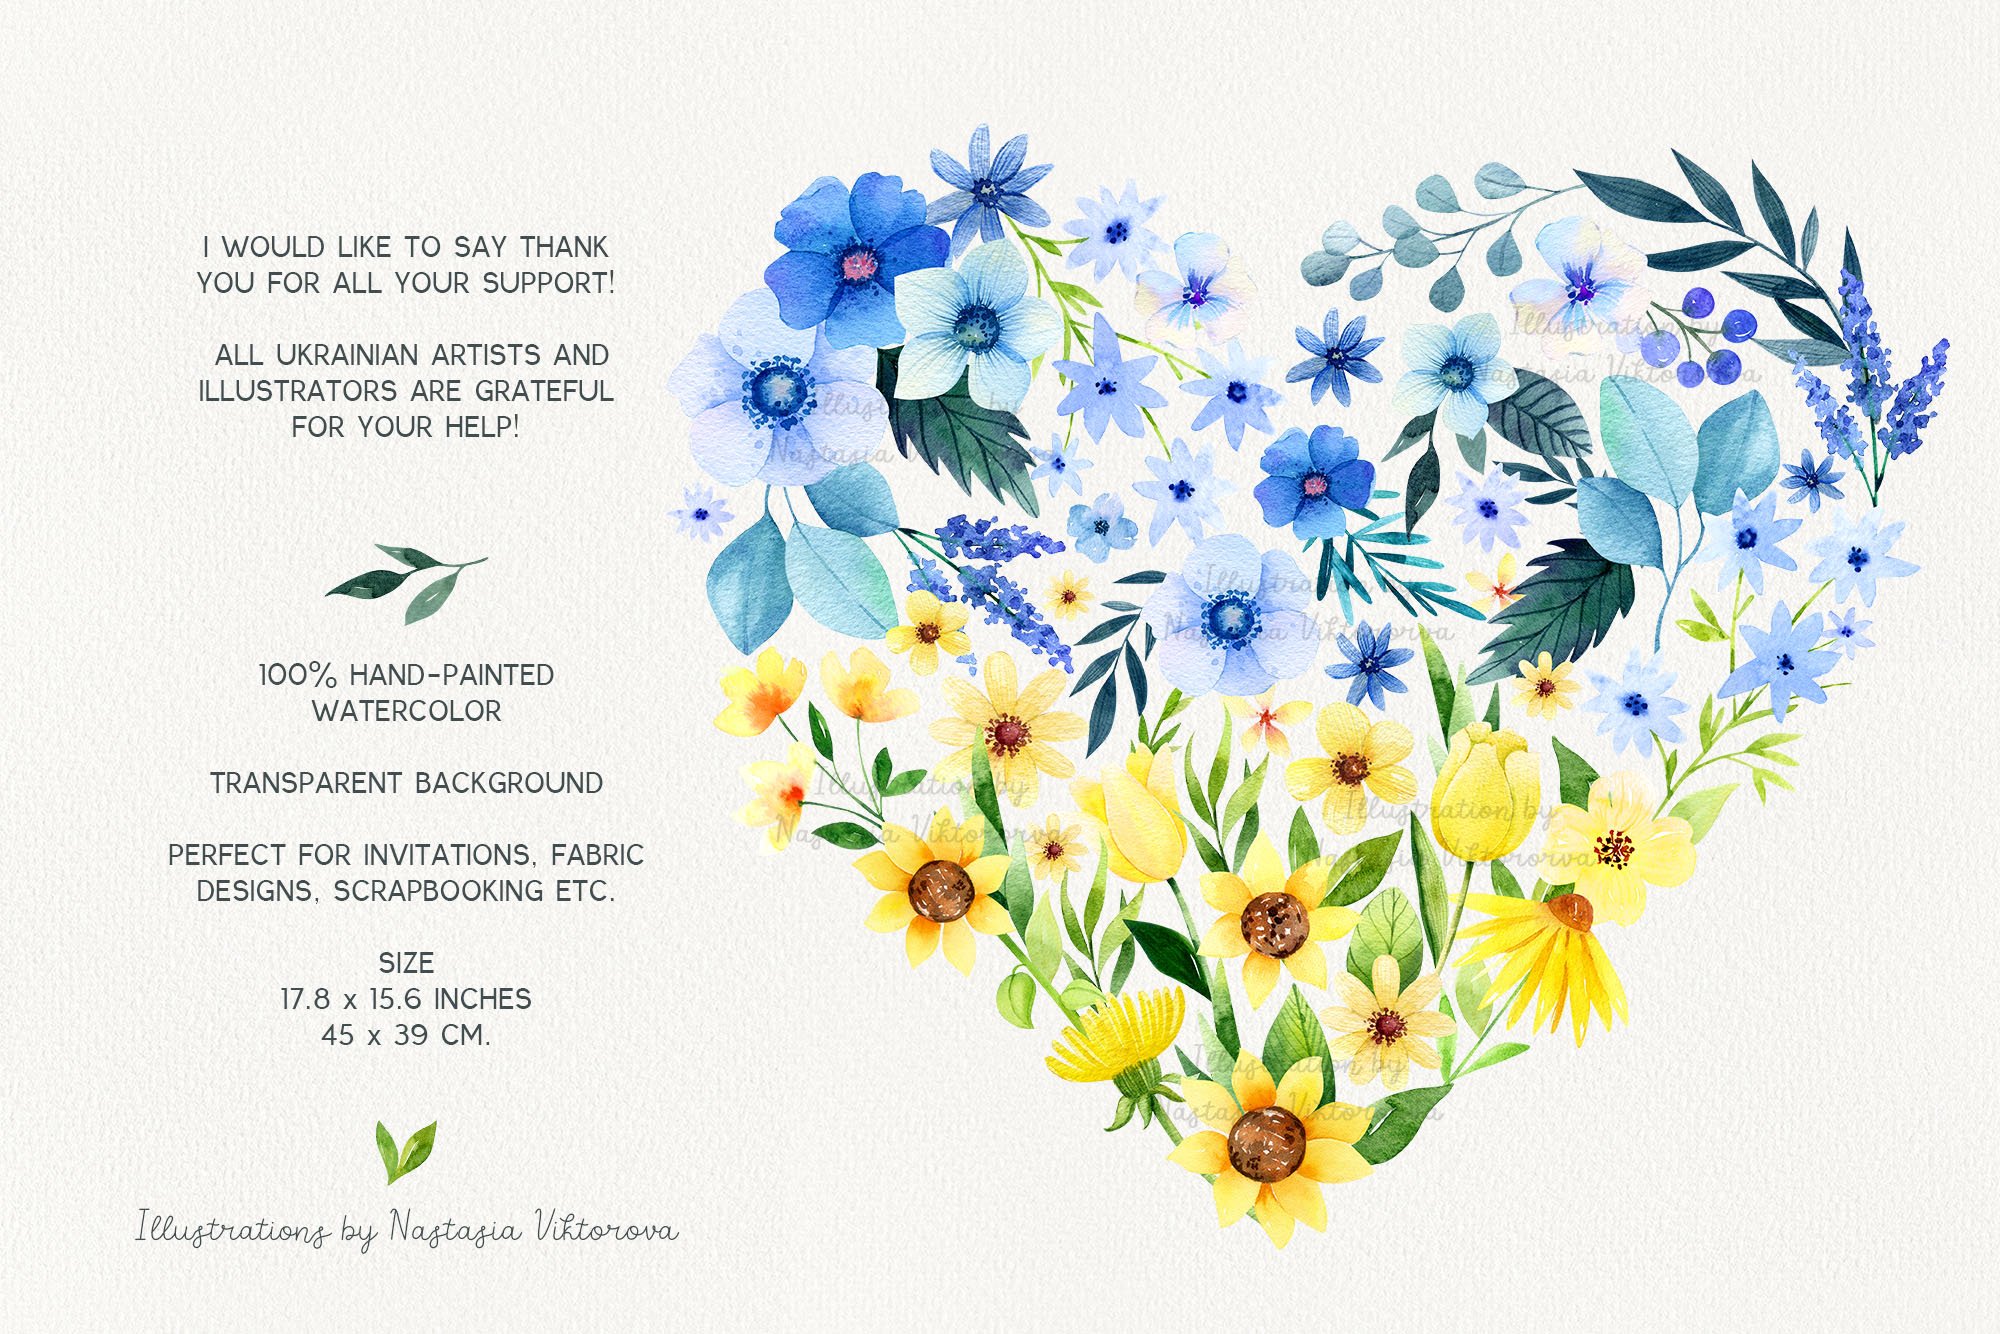 Ukraine watercolor flower clipart preview image.